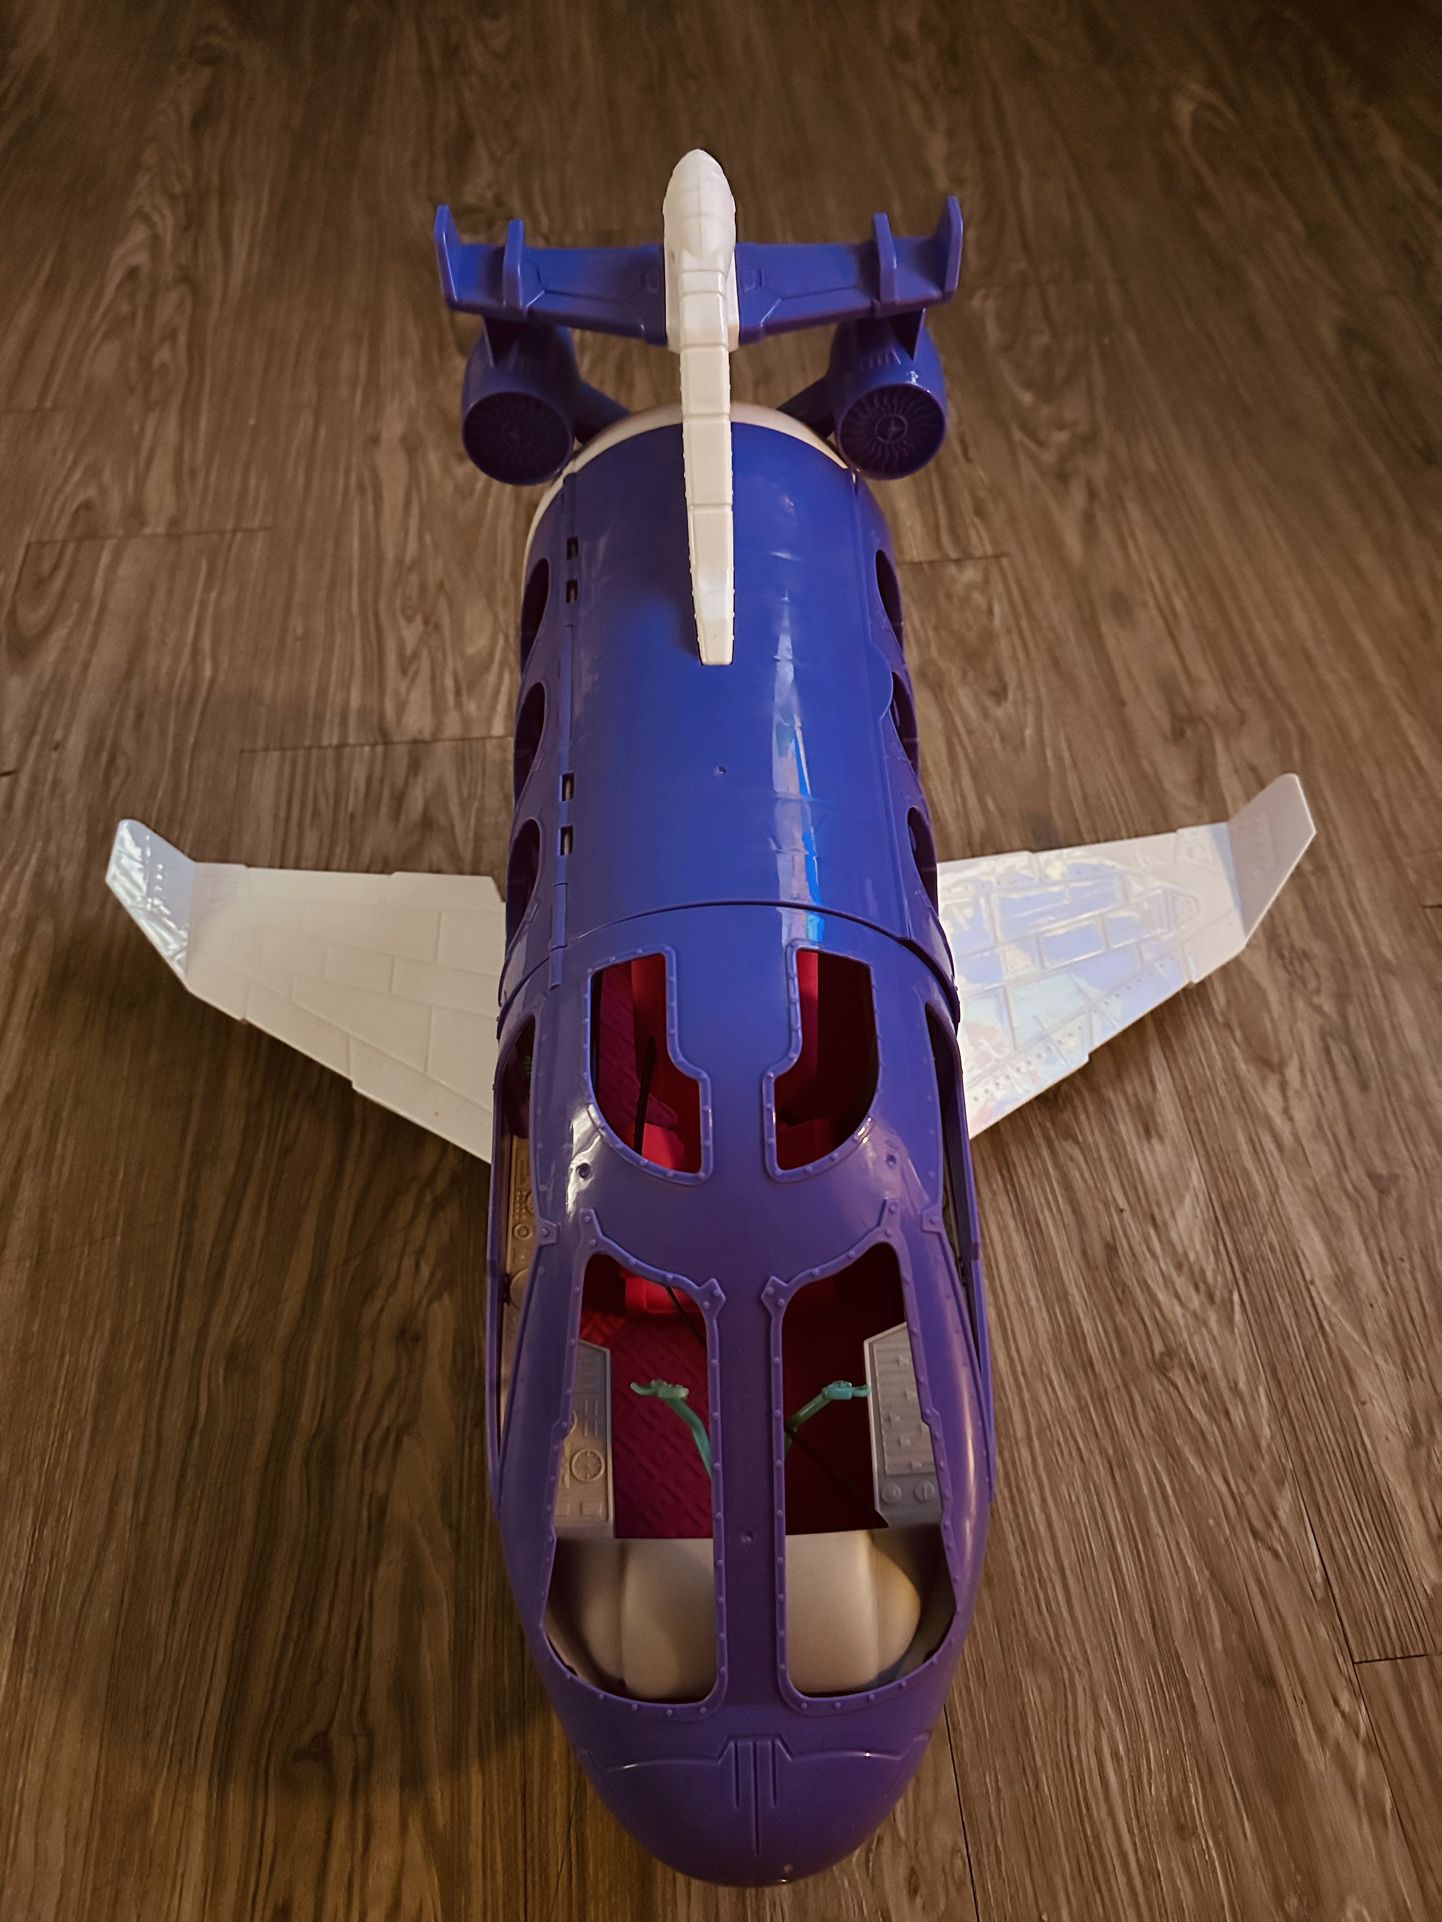 Barbie Airplane Toy 